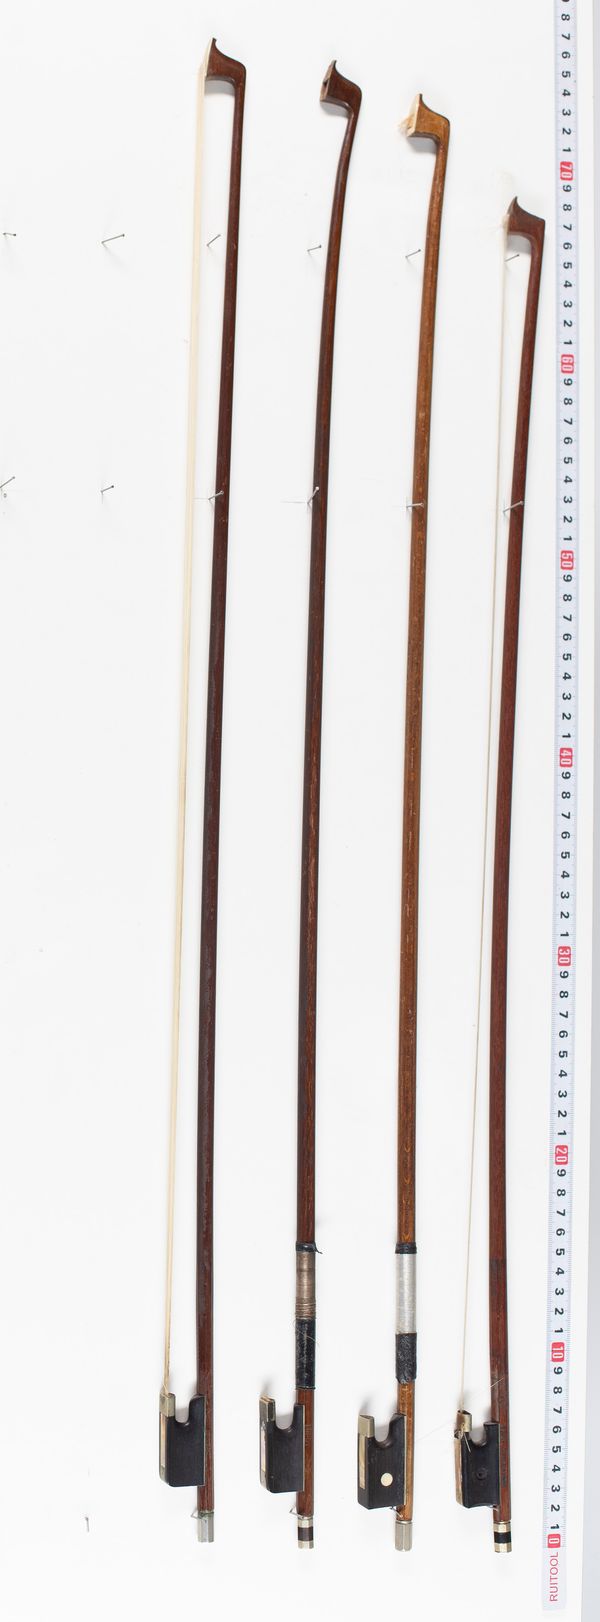 Four violin bows, varying lengths